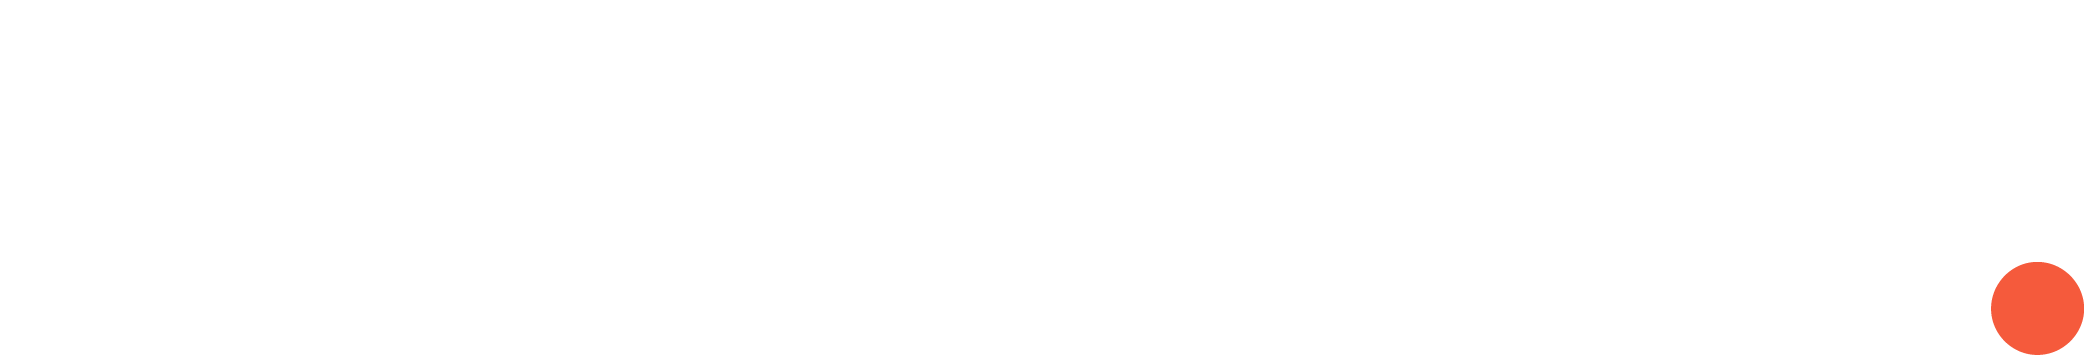 Netwise logo